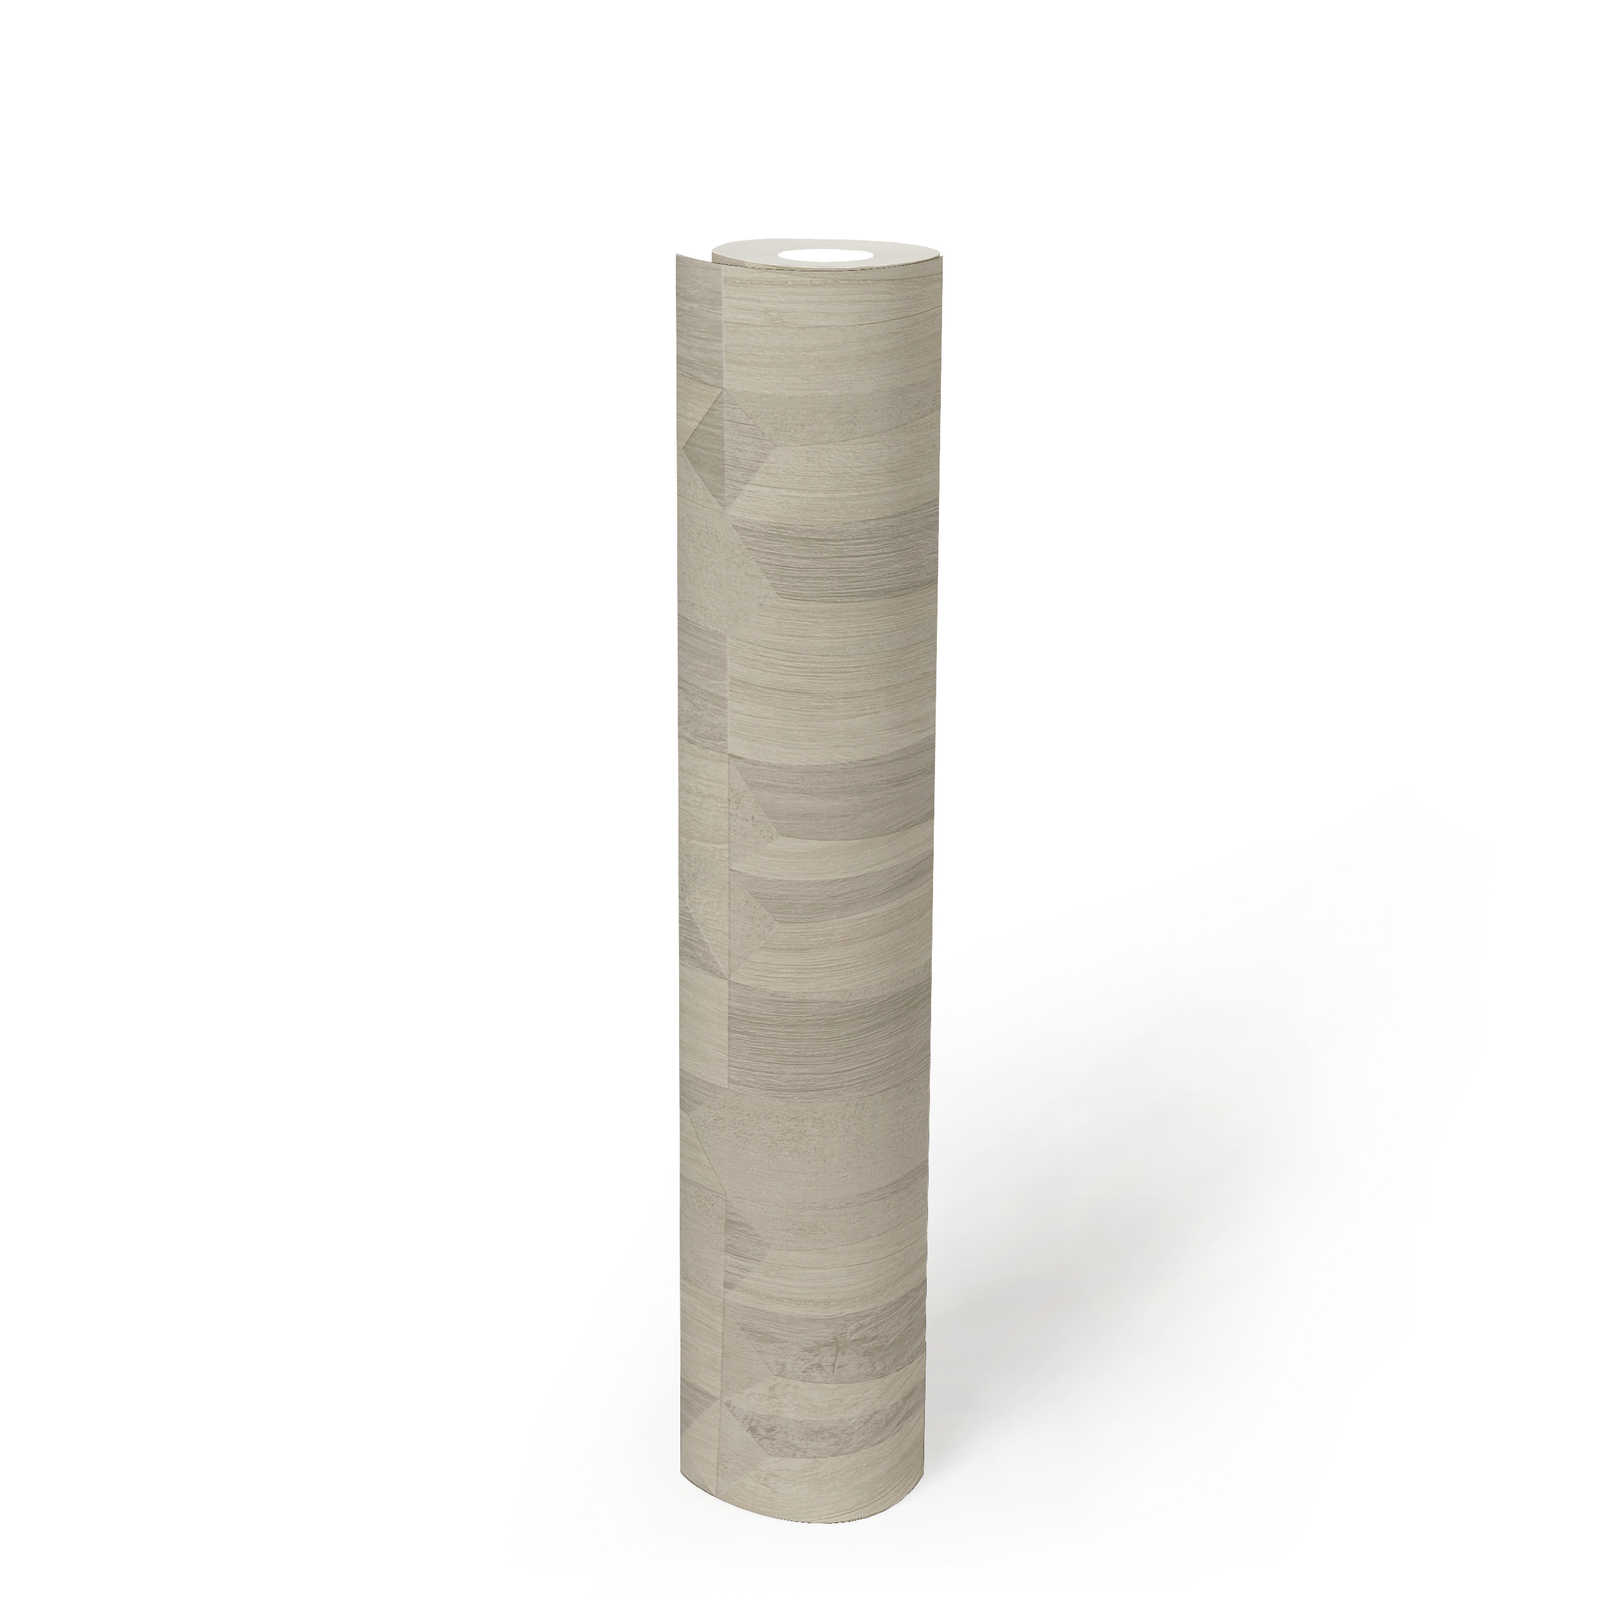             papel pintado ópticas de madera en aspecto retro - crema, gris
        